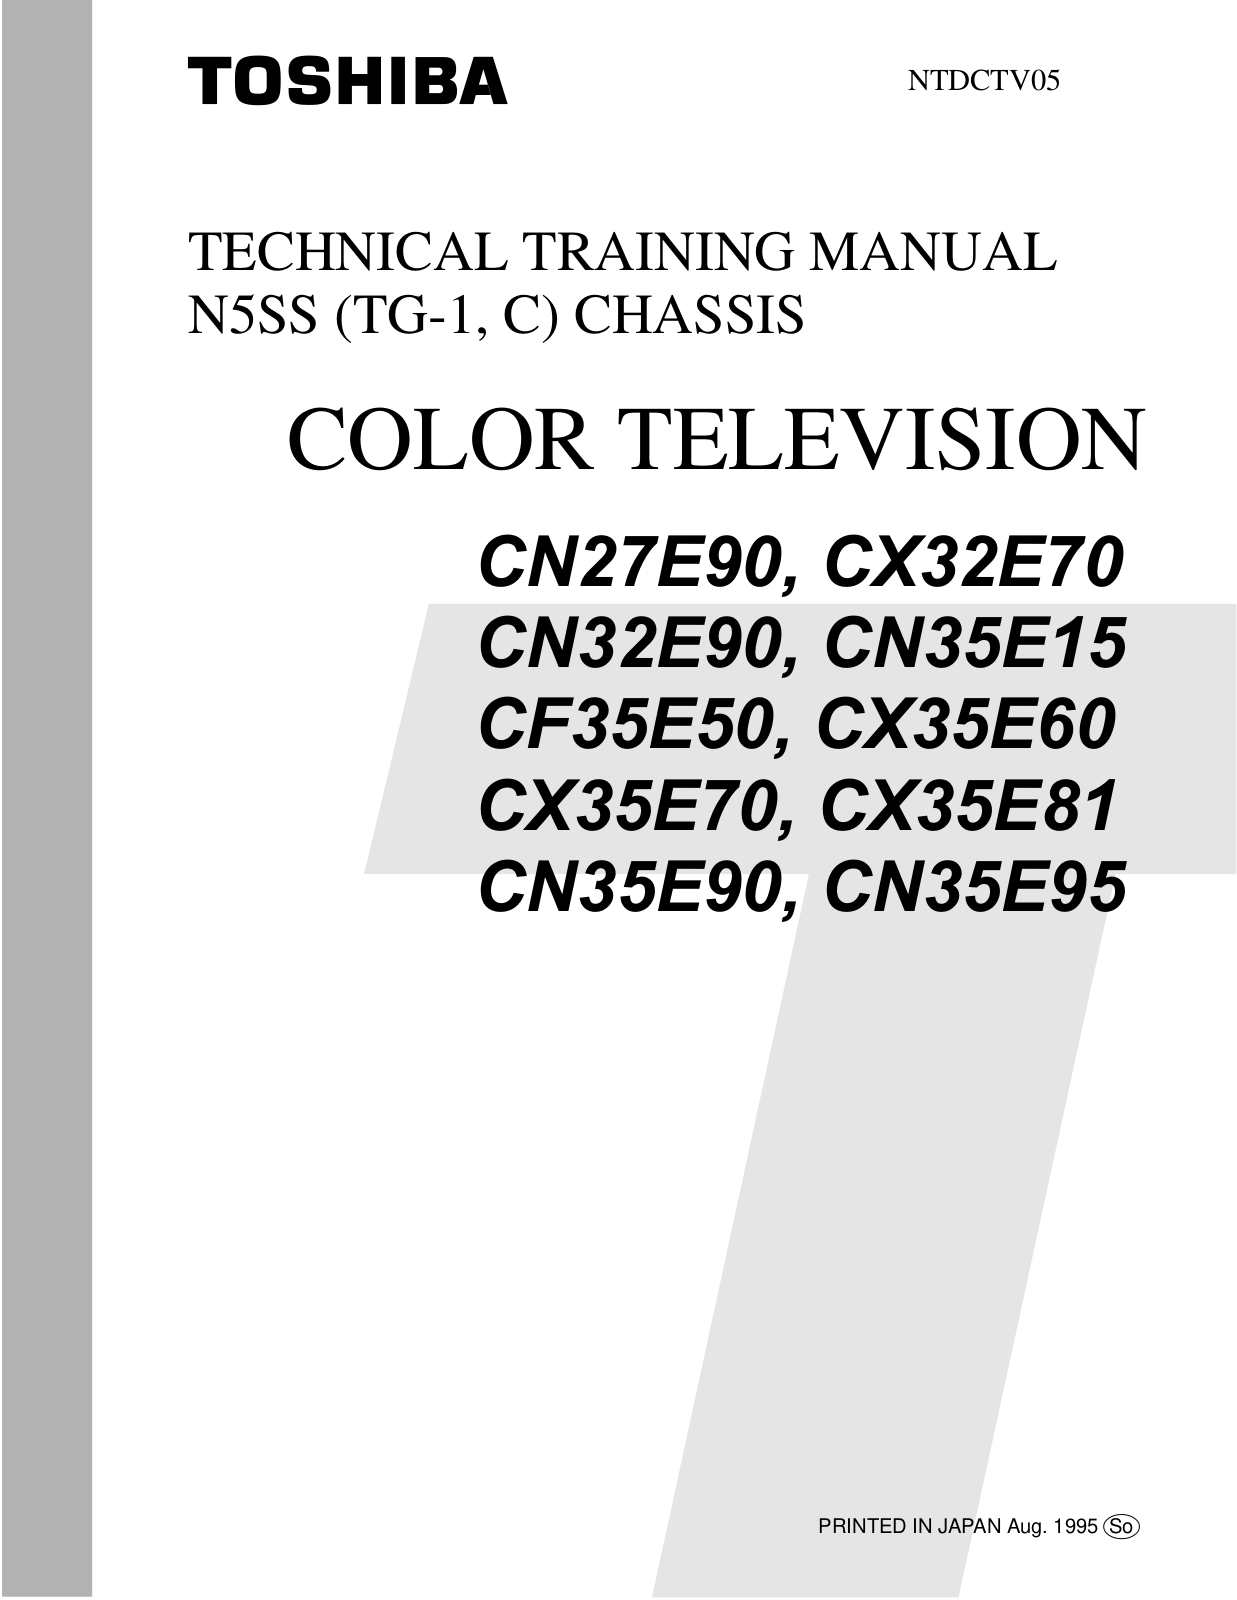 Toshiba CF35E50, CX35E81, CX32E70, CX35E60 TECHNICAL TRAINING MANUAL